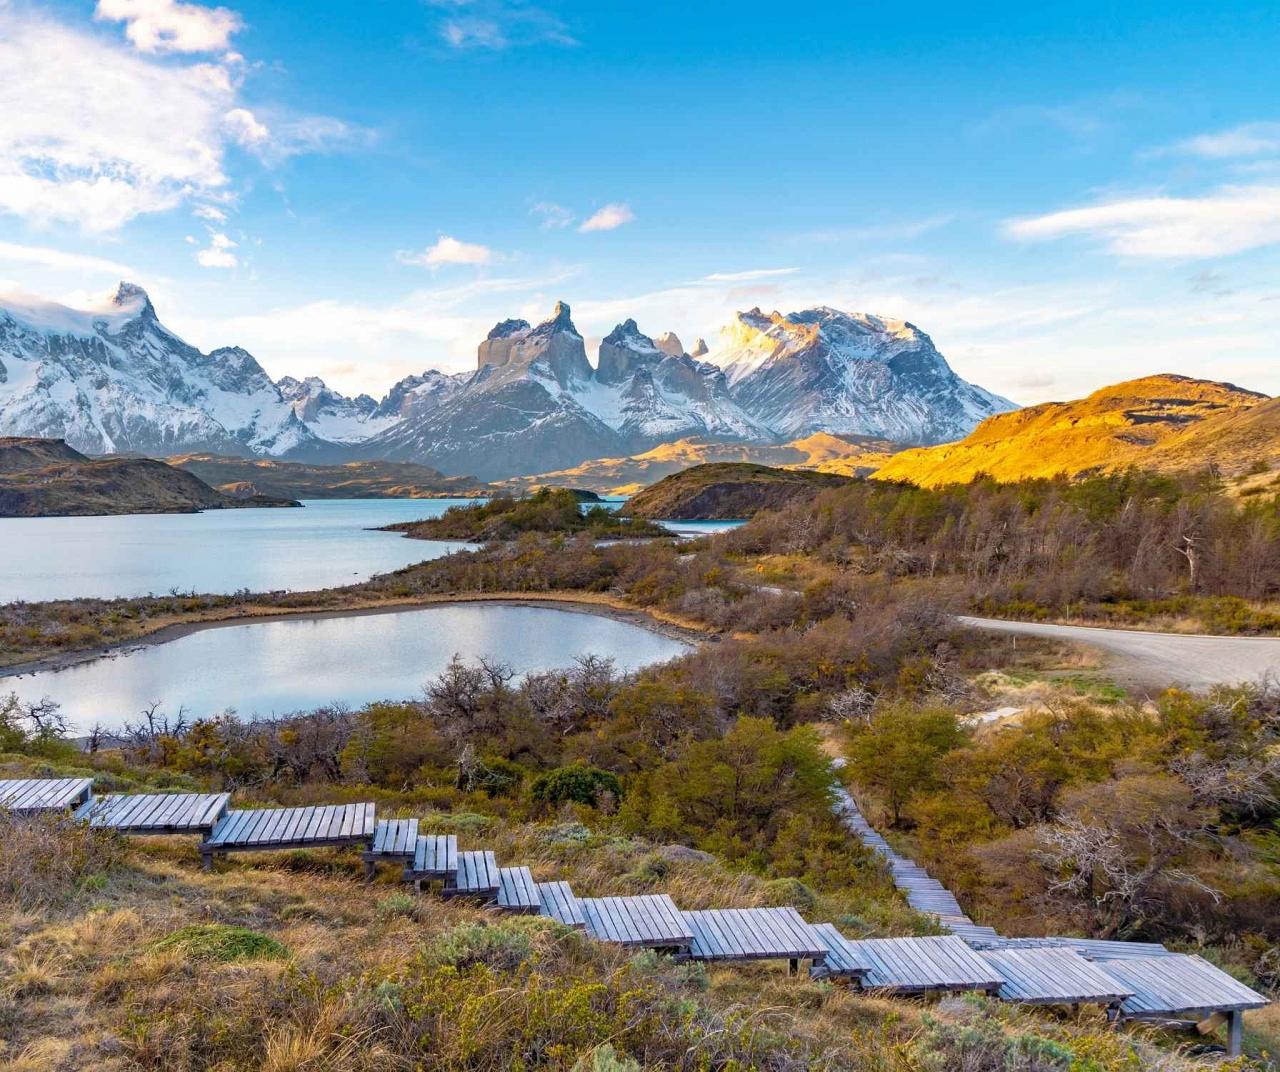 Torres del Paine, Patagonia, Patagonia Nature Tour, Naturalist Journeys, Argentina, Chile